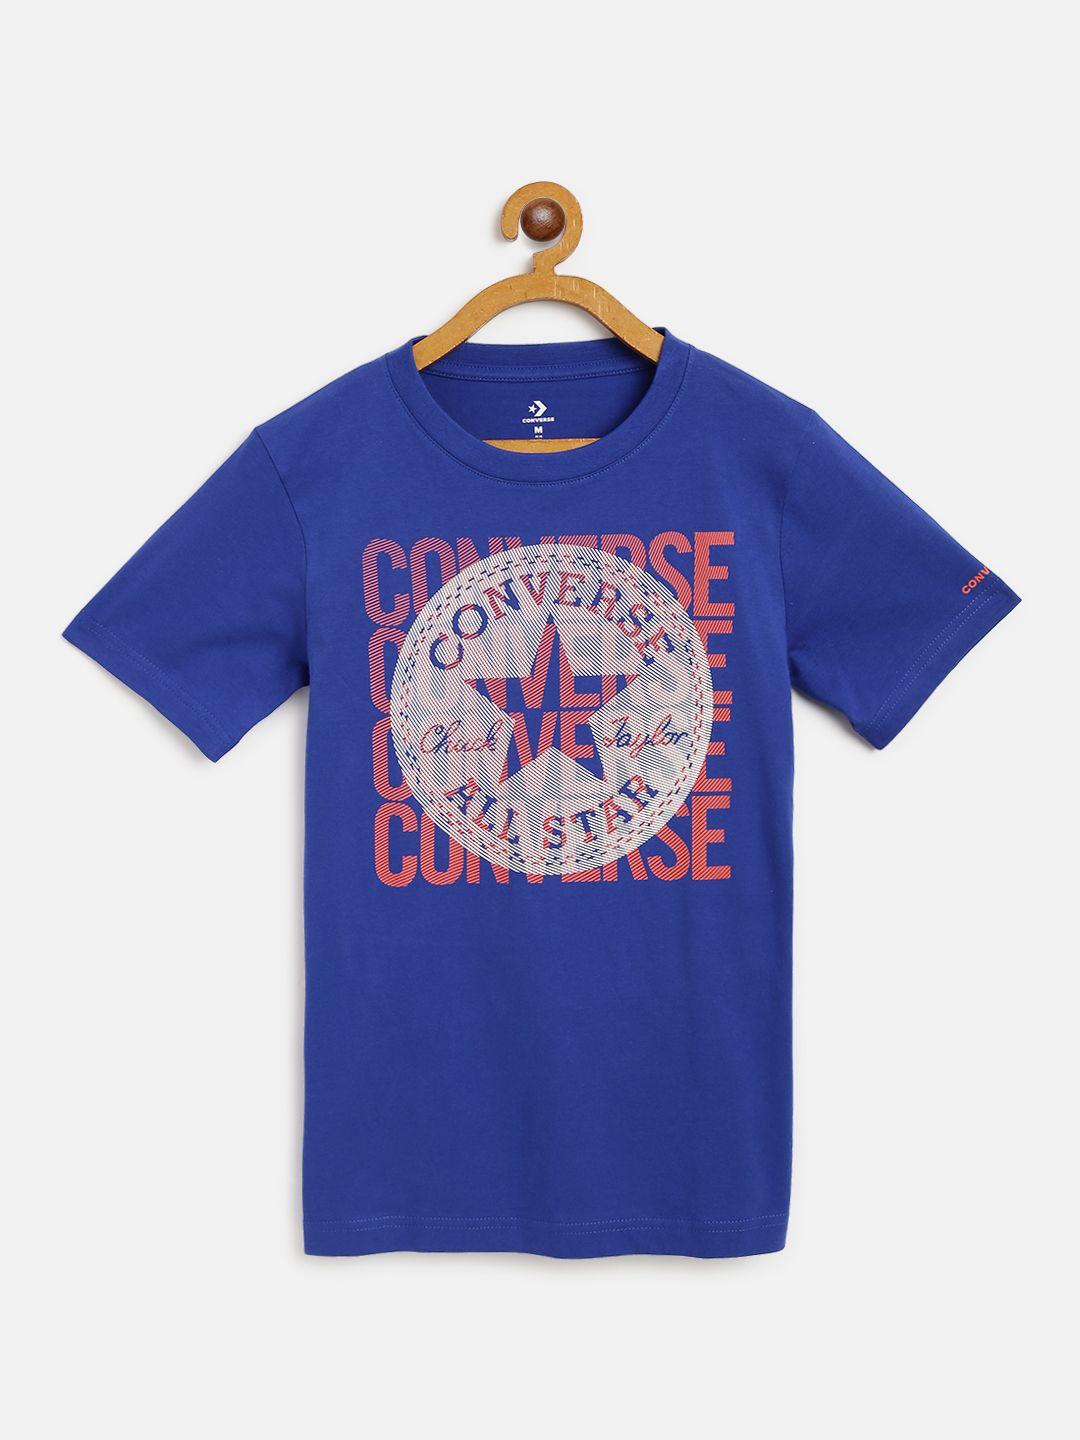 Converse Boys Blue & White Brand Logo Print Round Neck T-shirt